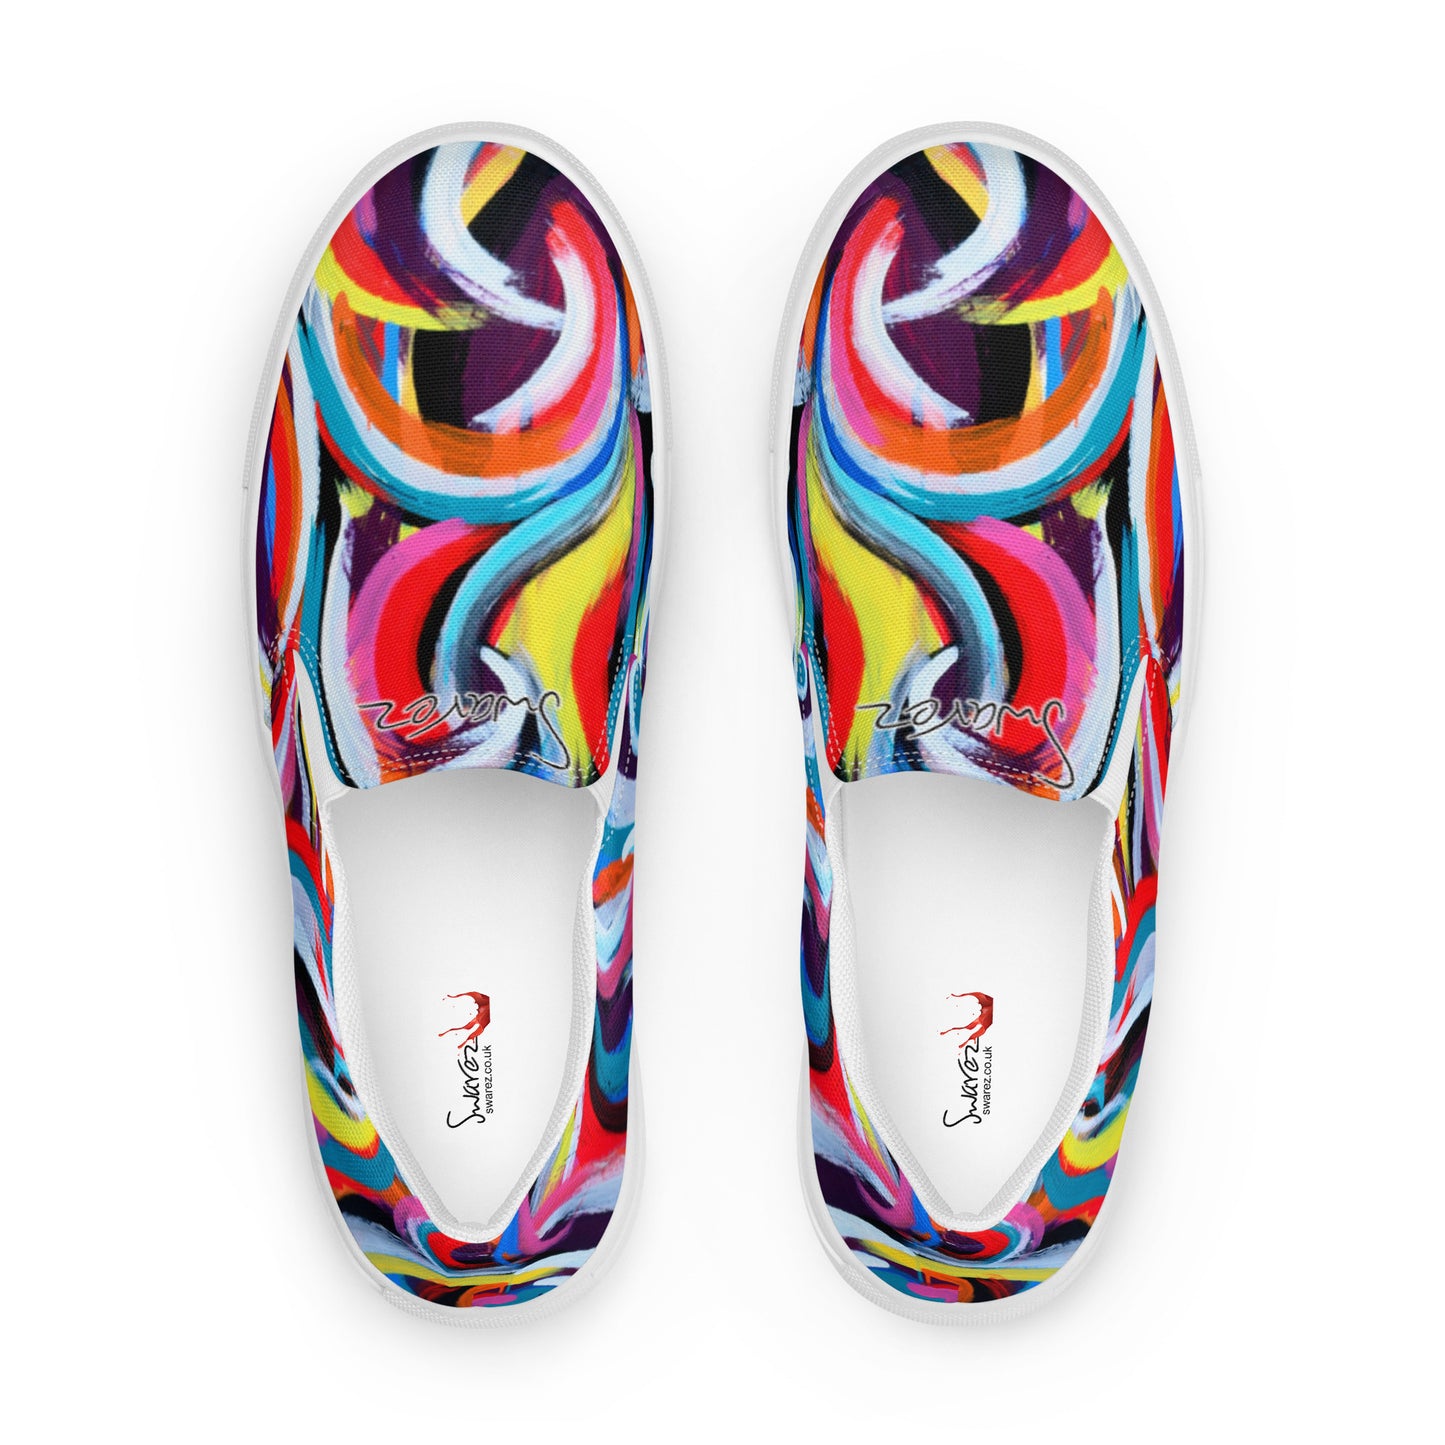 Women’s slip-on canvas shoes - Multi-color swirls